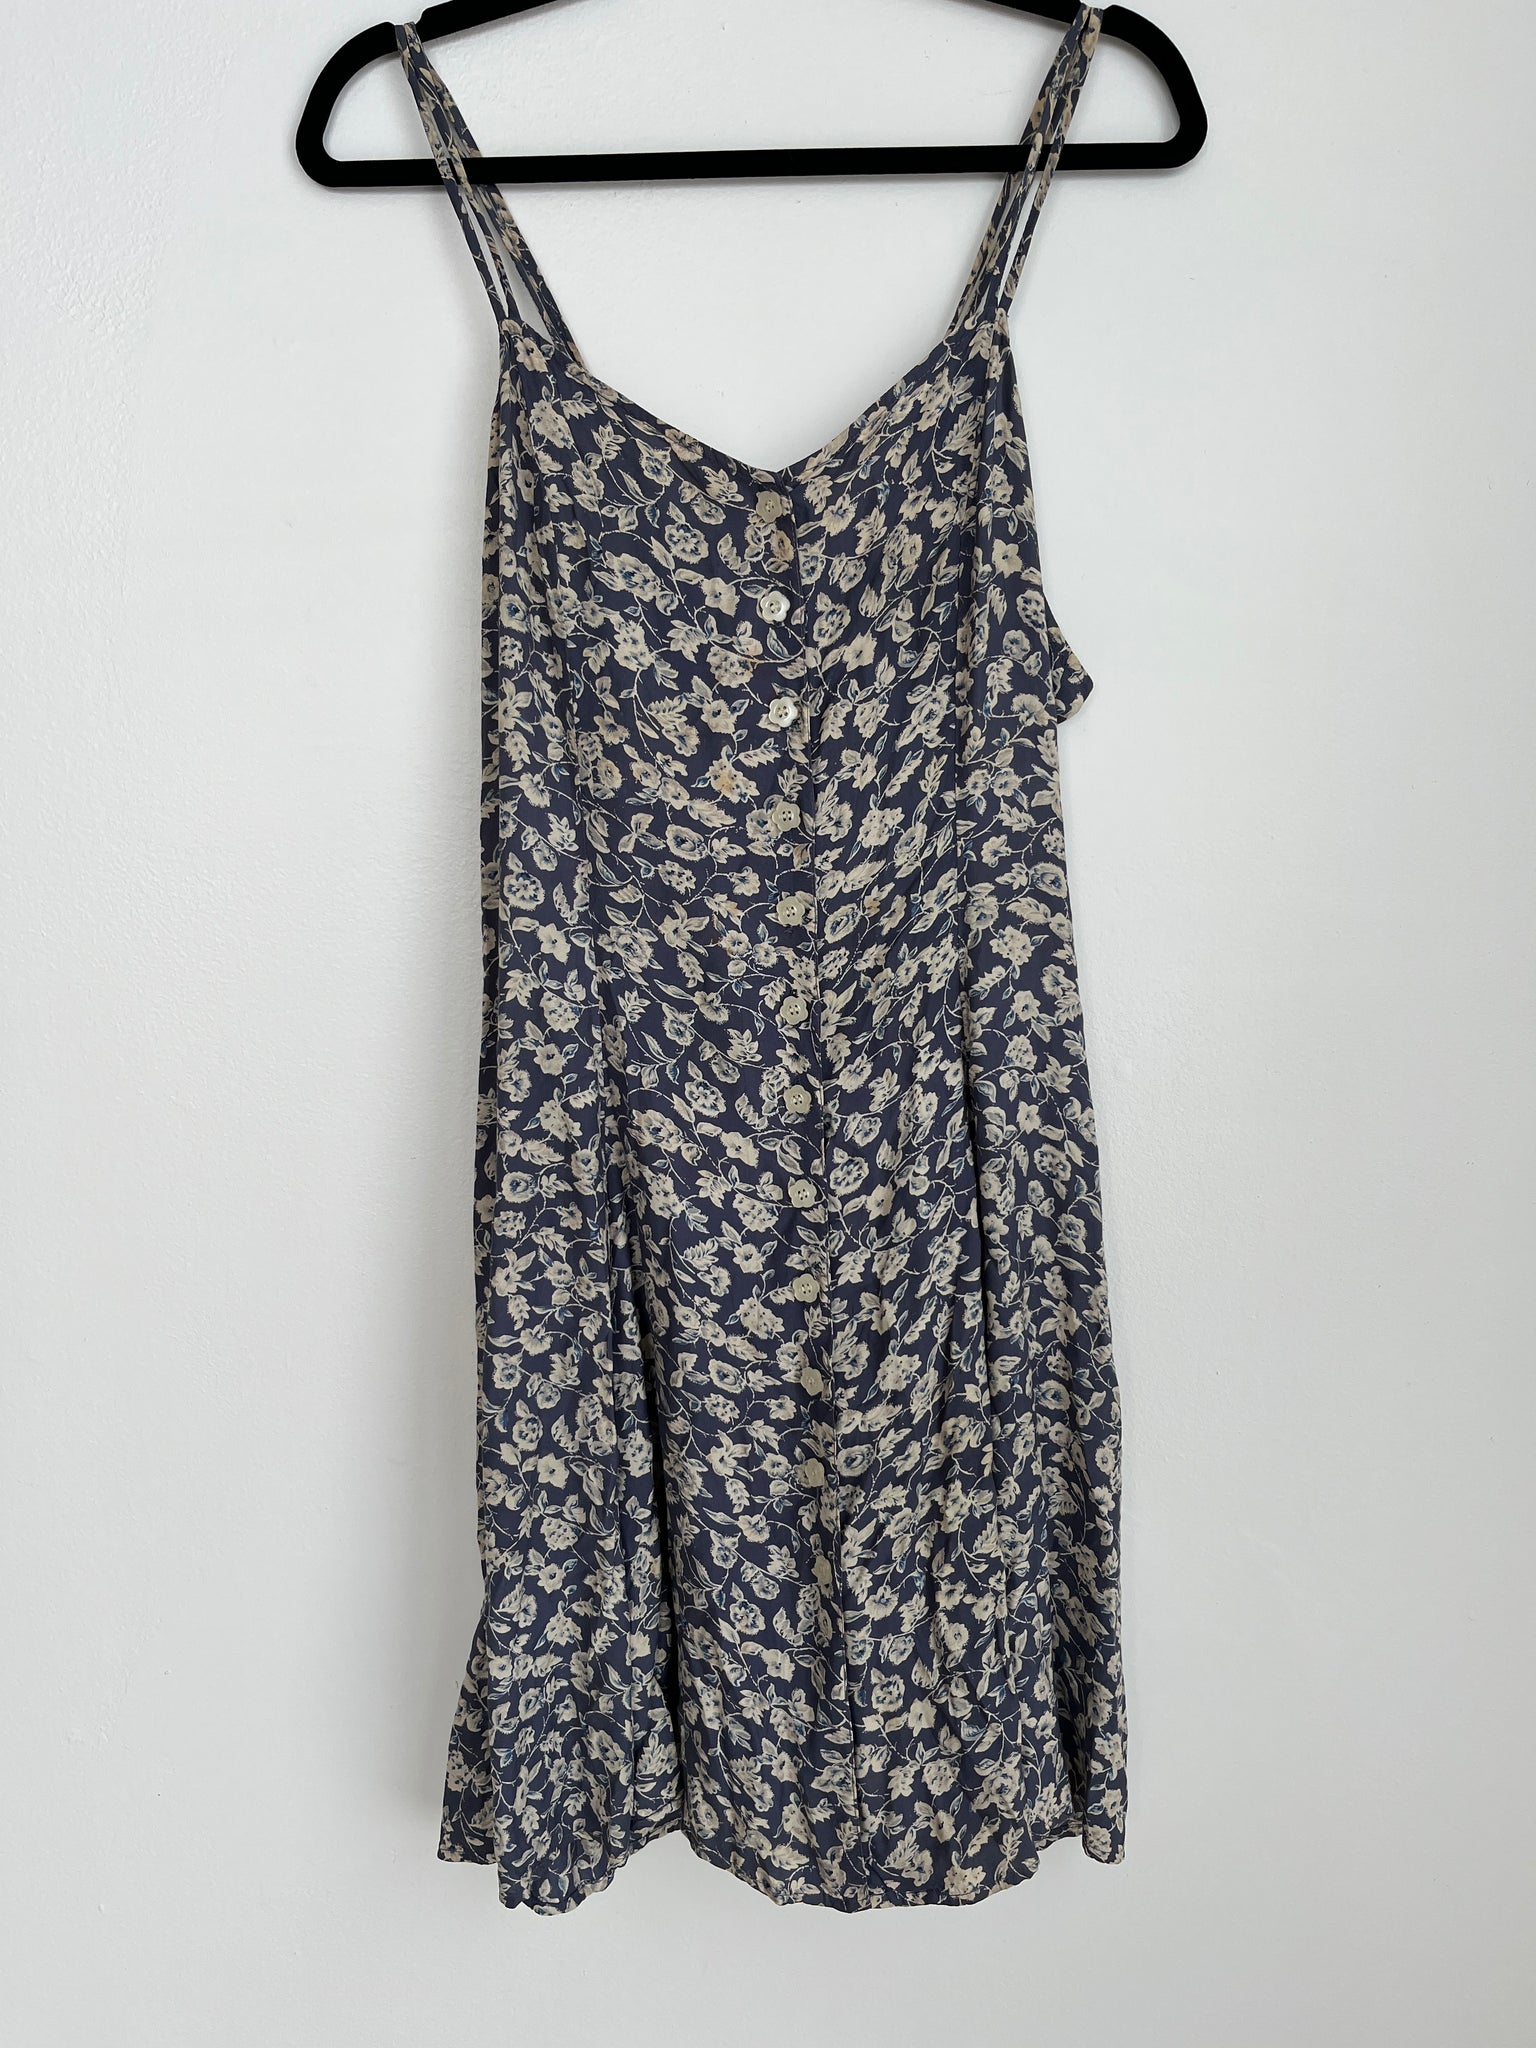 1990s DRESS- cornflower blue floral print rayon